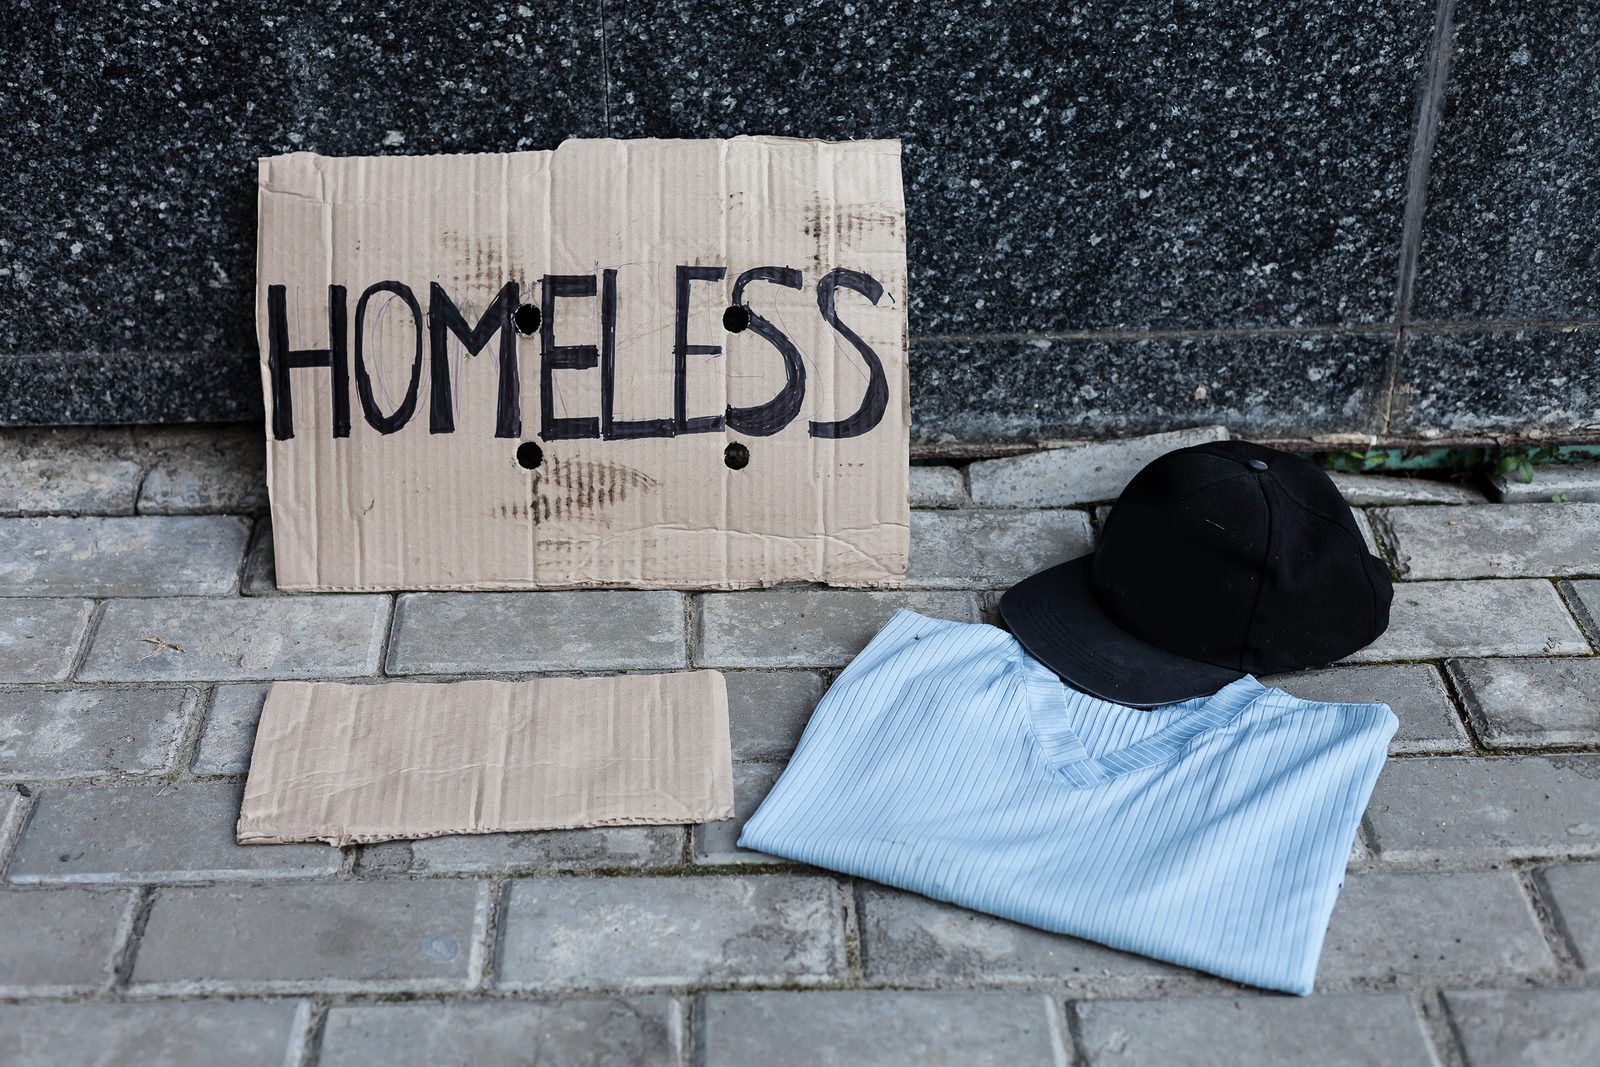 Ireland’s homeless crisis - spunout